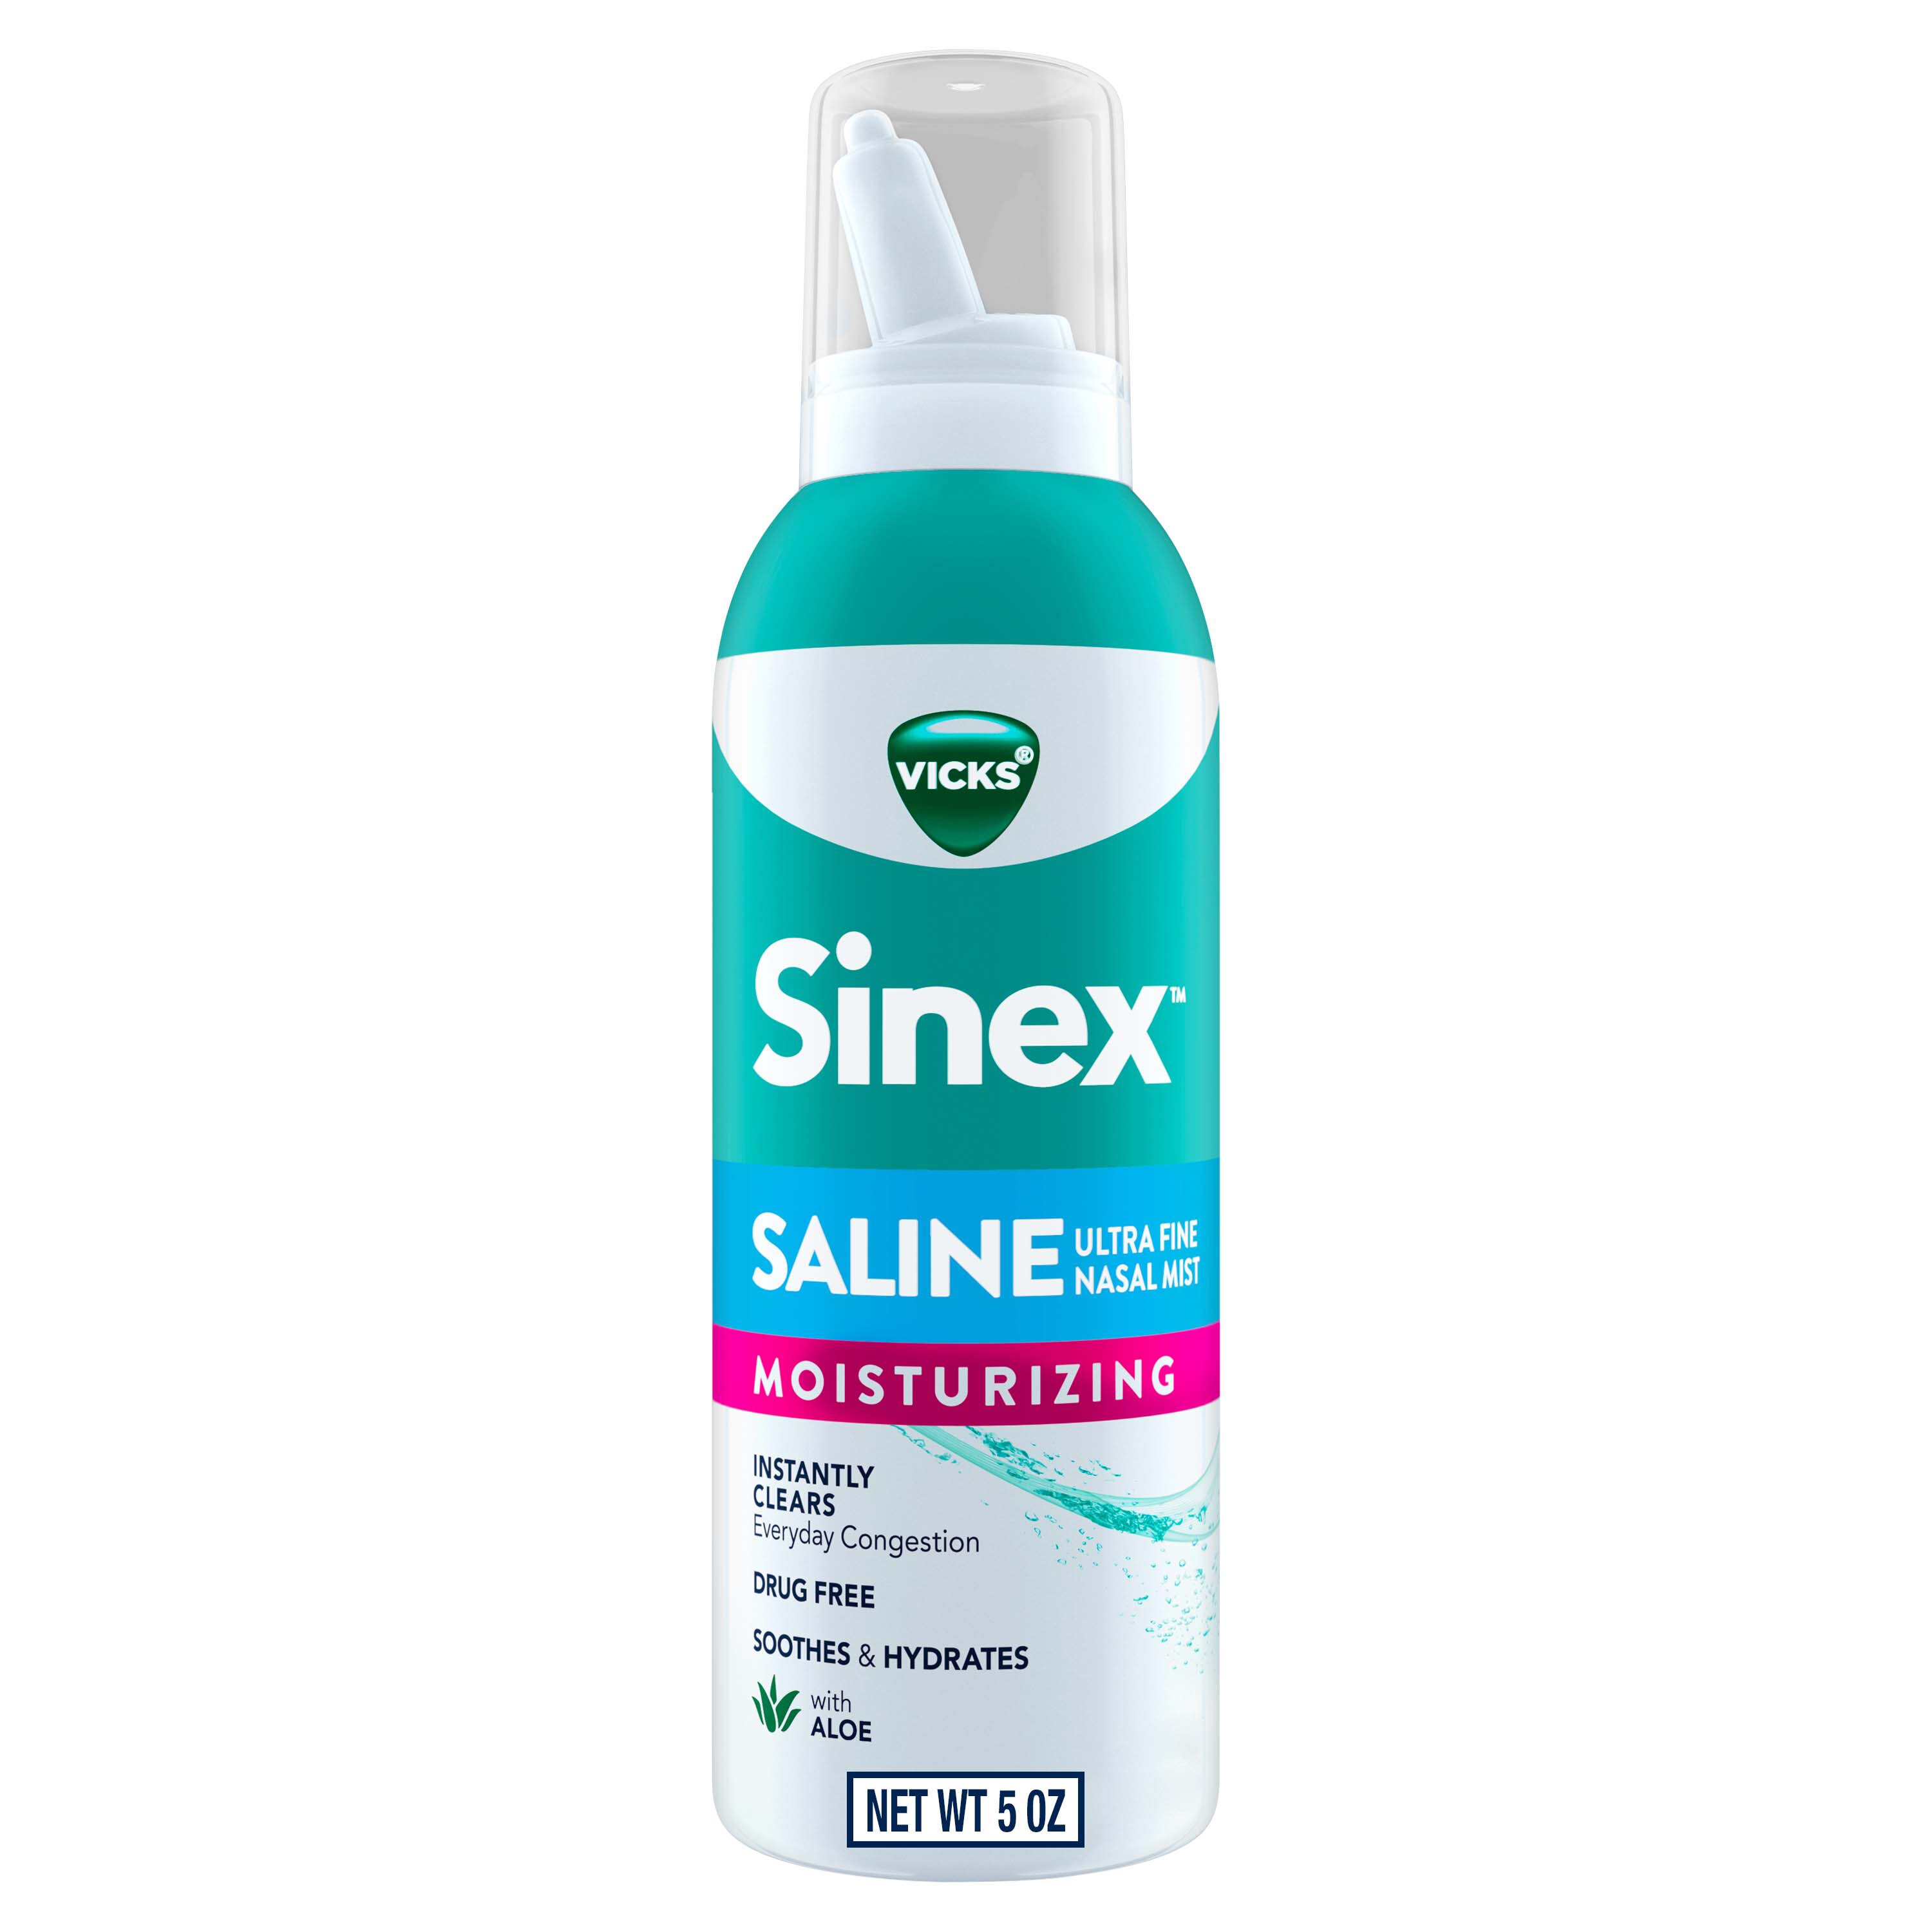 VICKS Sinex Moisturizing Saline Nasal Spray, Gentle Ultra-Fine Nasal Mist, Drug-Free Everyday Sinus Congestion Relief, 5 OZ